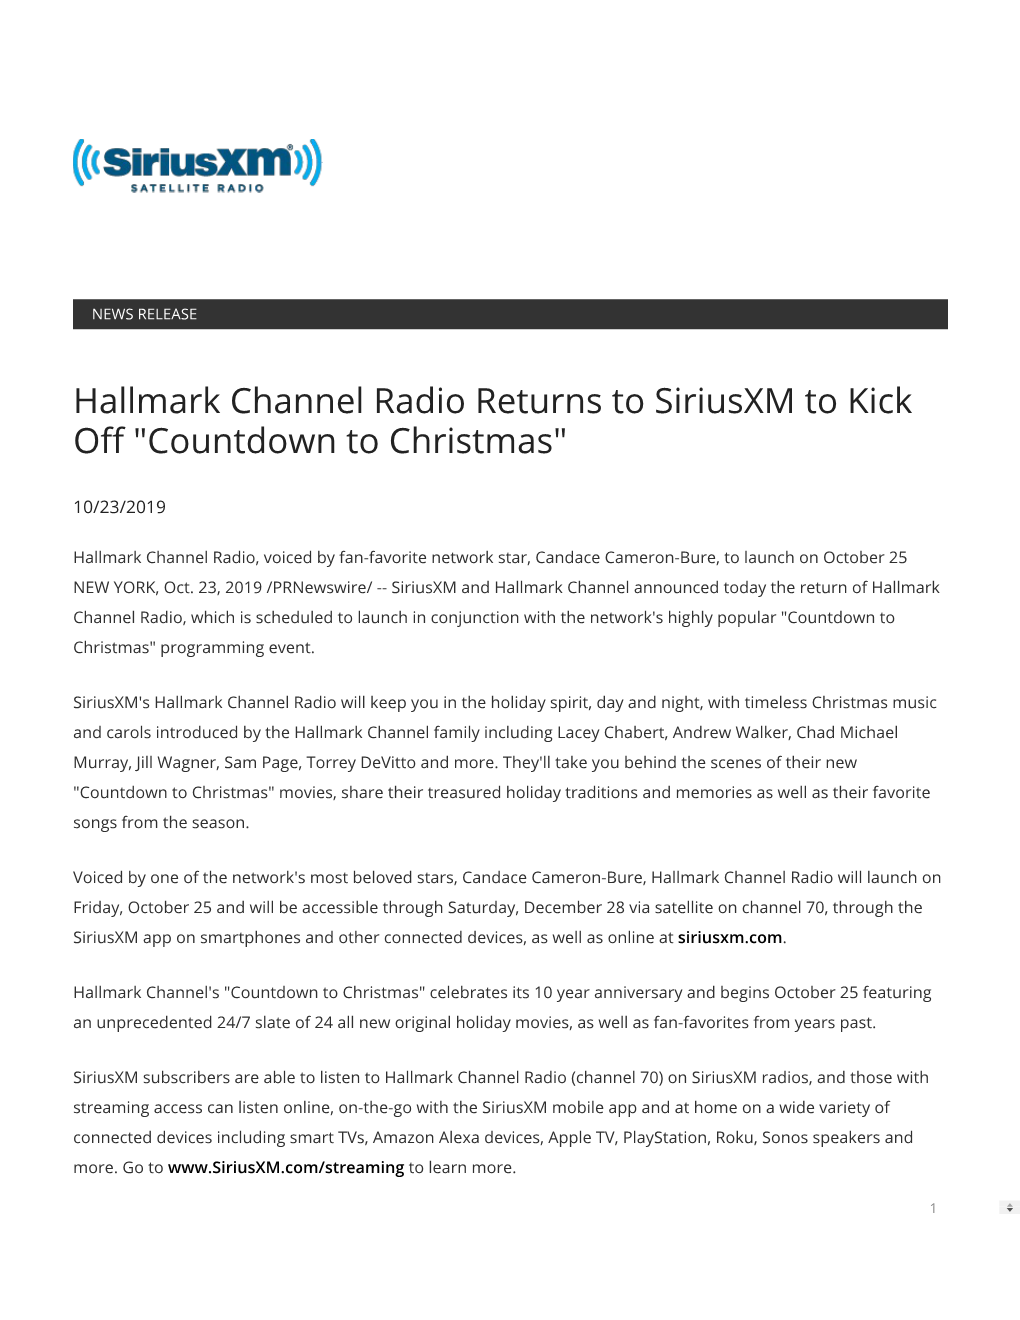 Hallmark Channel Radio Returns to Siriusxm to Kick O "Countdown